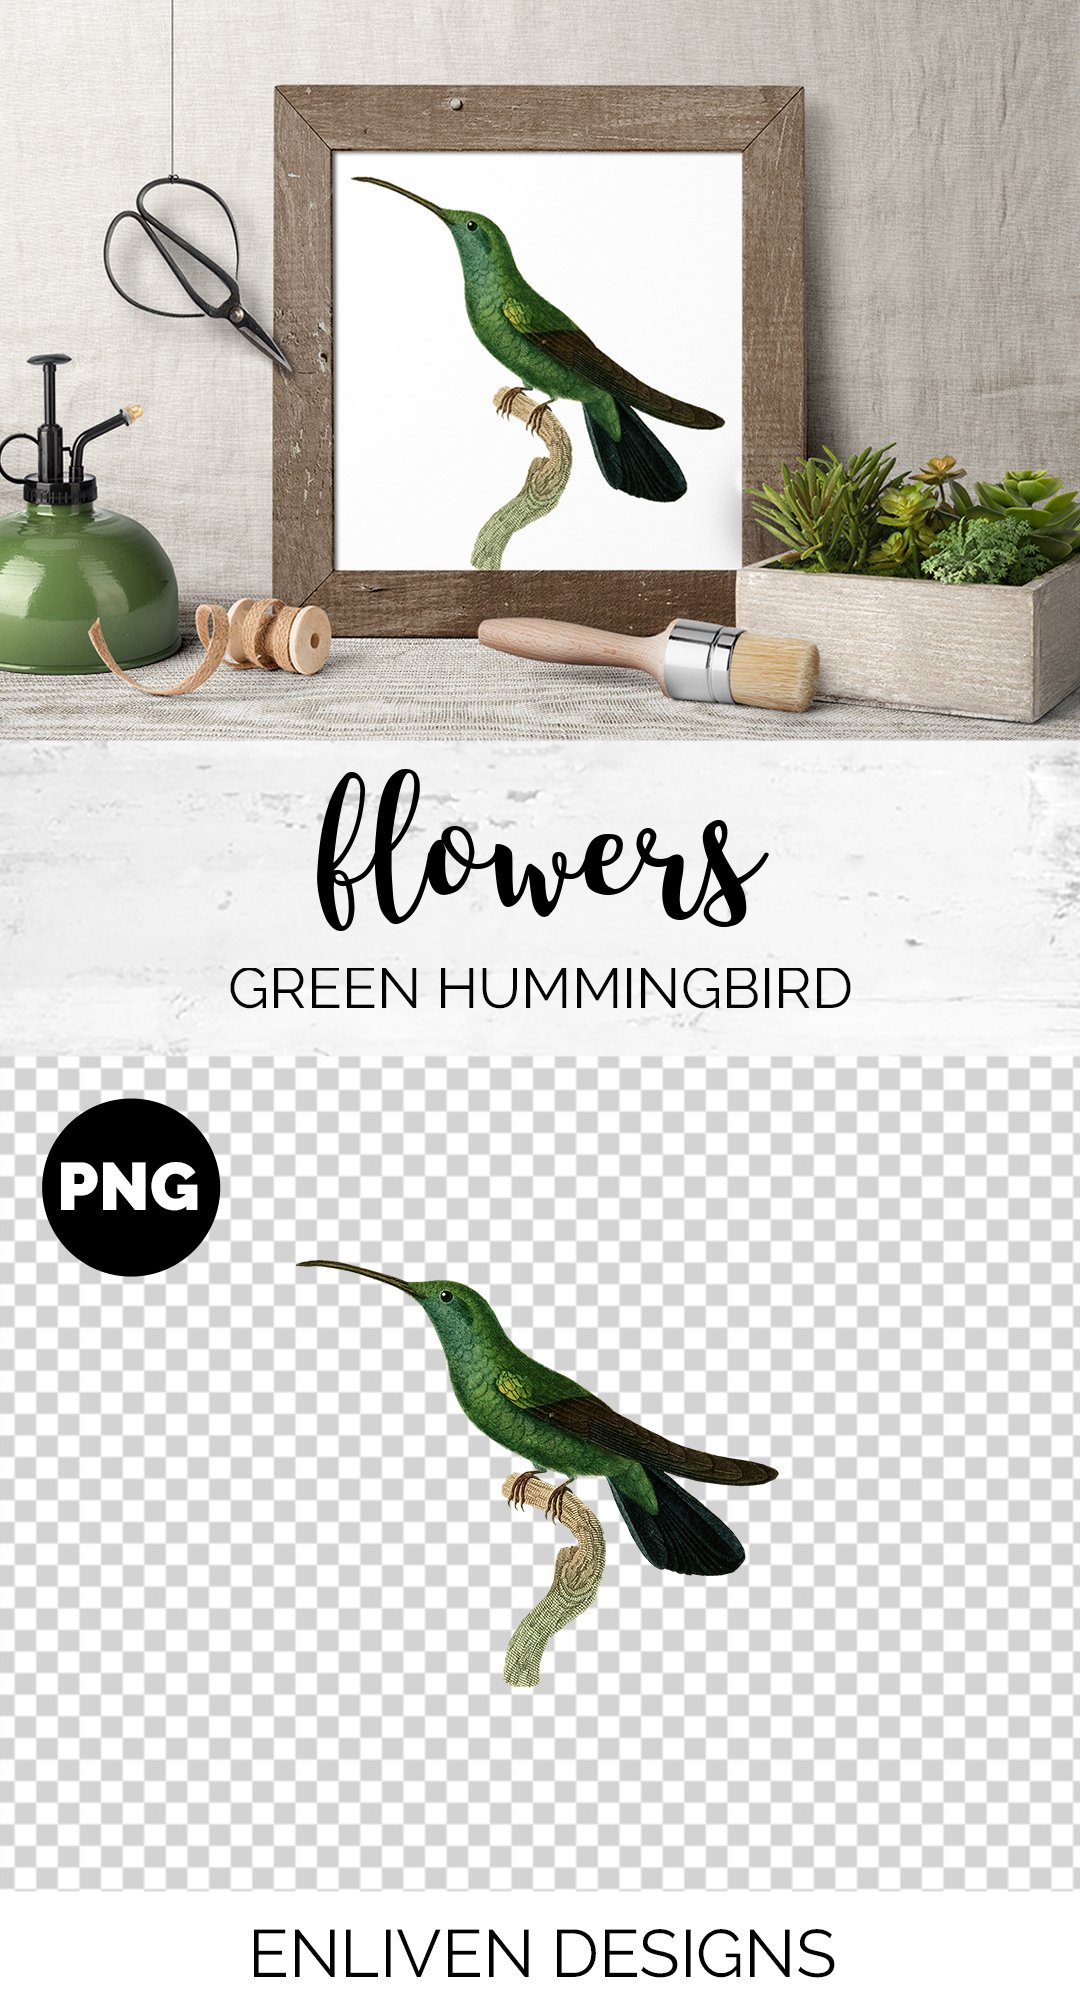 e01v01o 84561 green hummingbird b 109